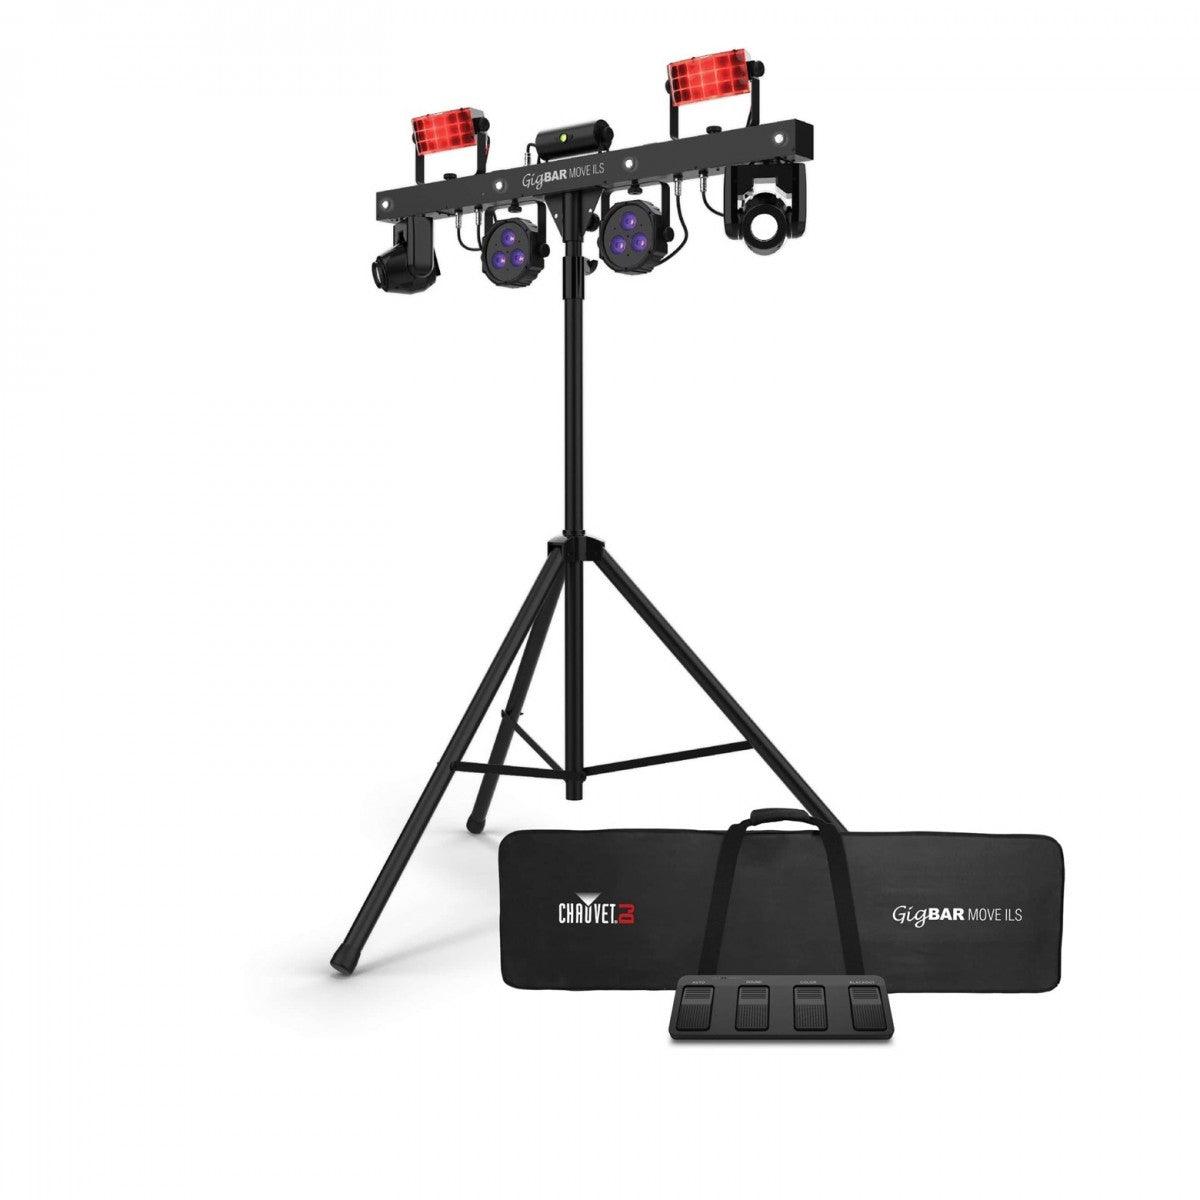 Chauvet GigBAR Move ILS 5-in-1 Lighting System - DY Pro Audio